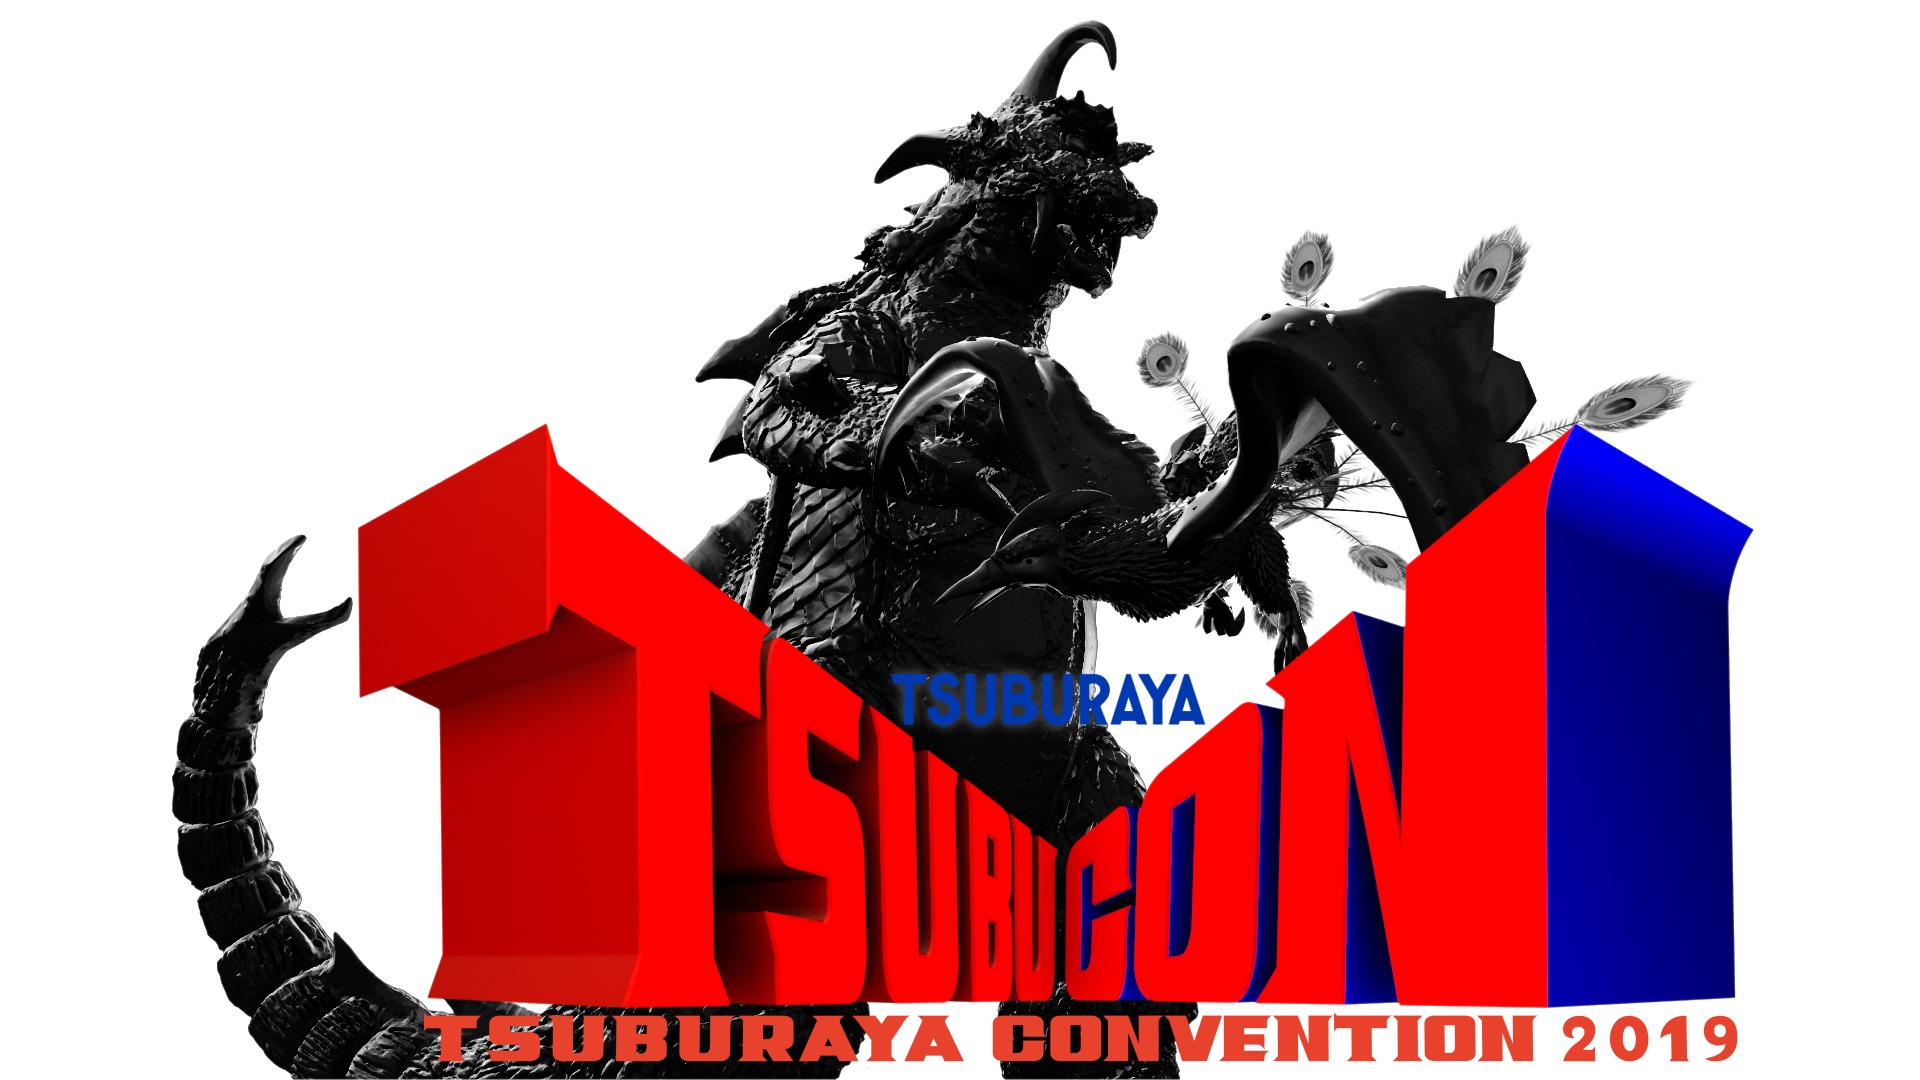 『TSUBURAYA CONVENTION 2019』ロゴ (C)円谷プロ (C)Eiichi Shimizu,Tomohiro Shimoguchi (C)ULTRAMAN製作委員会